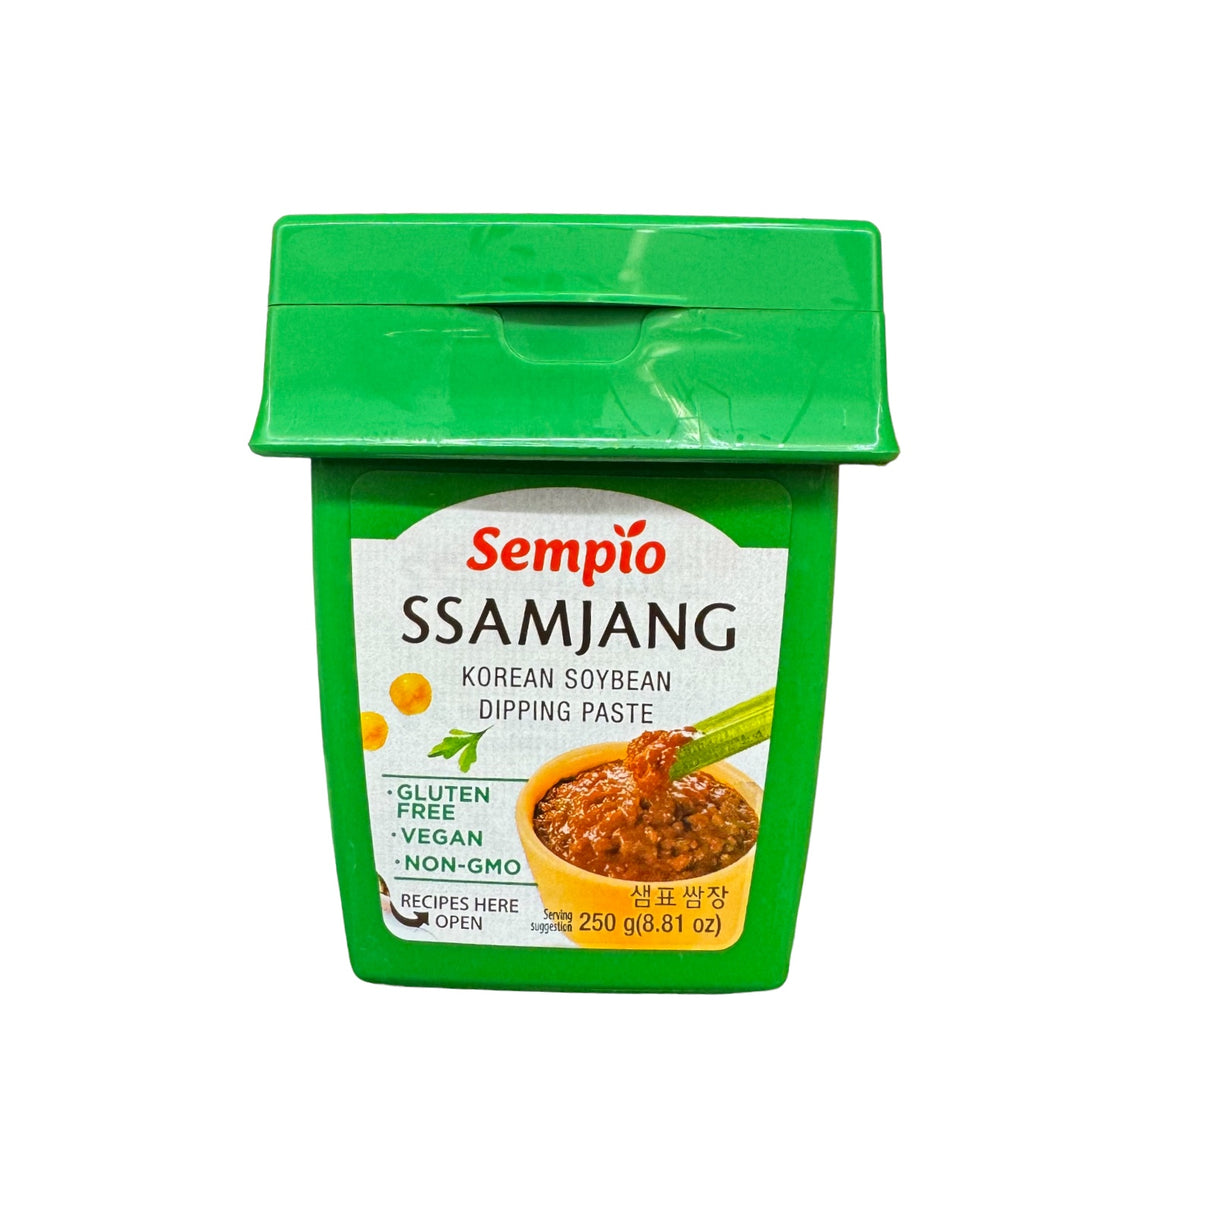 Sempio Ssamjang Korean Soybean Dipping Paste